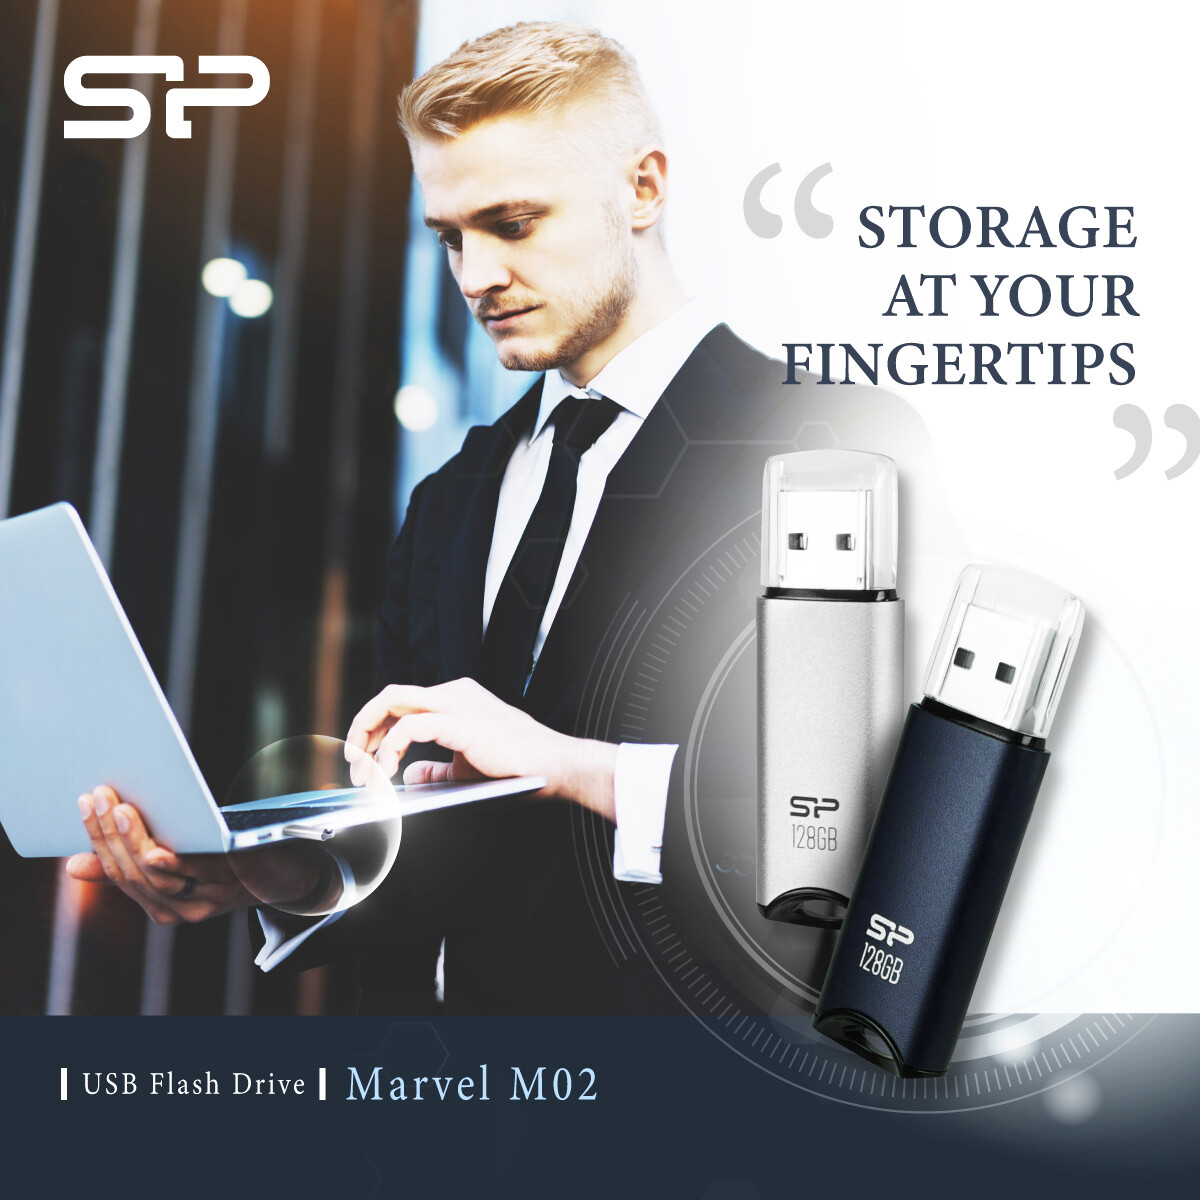 Silicon Power Announces the Marvel M02 USB Flash Drive